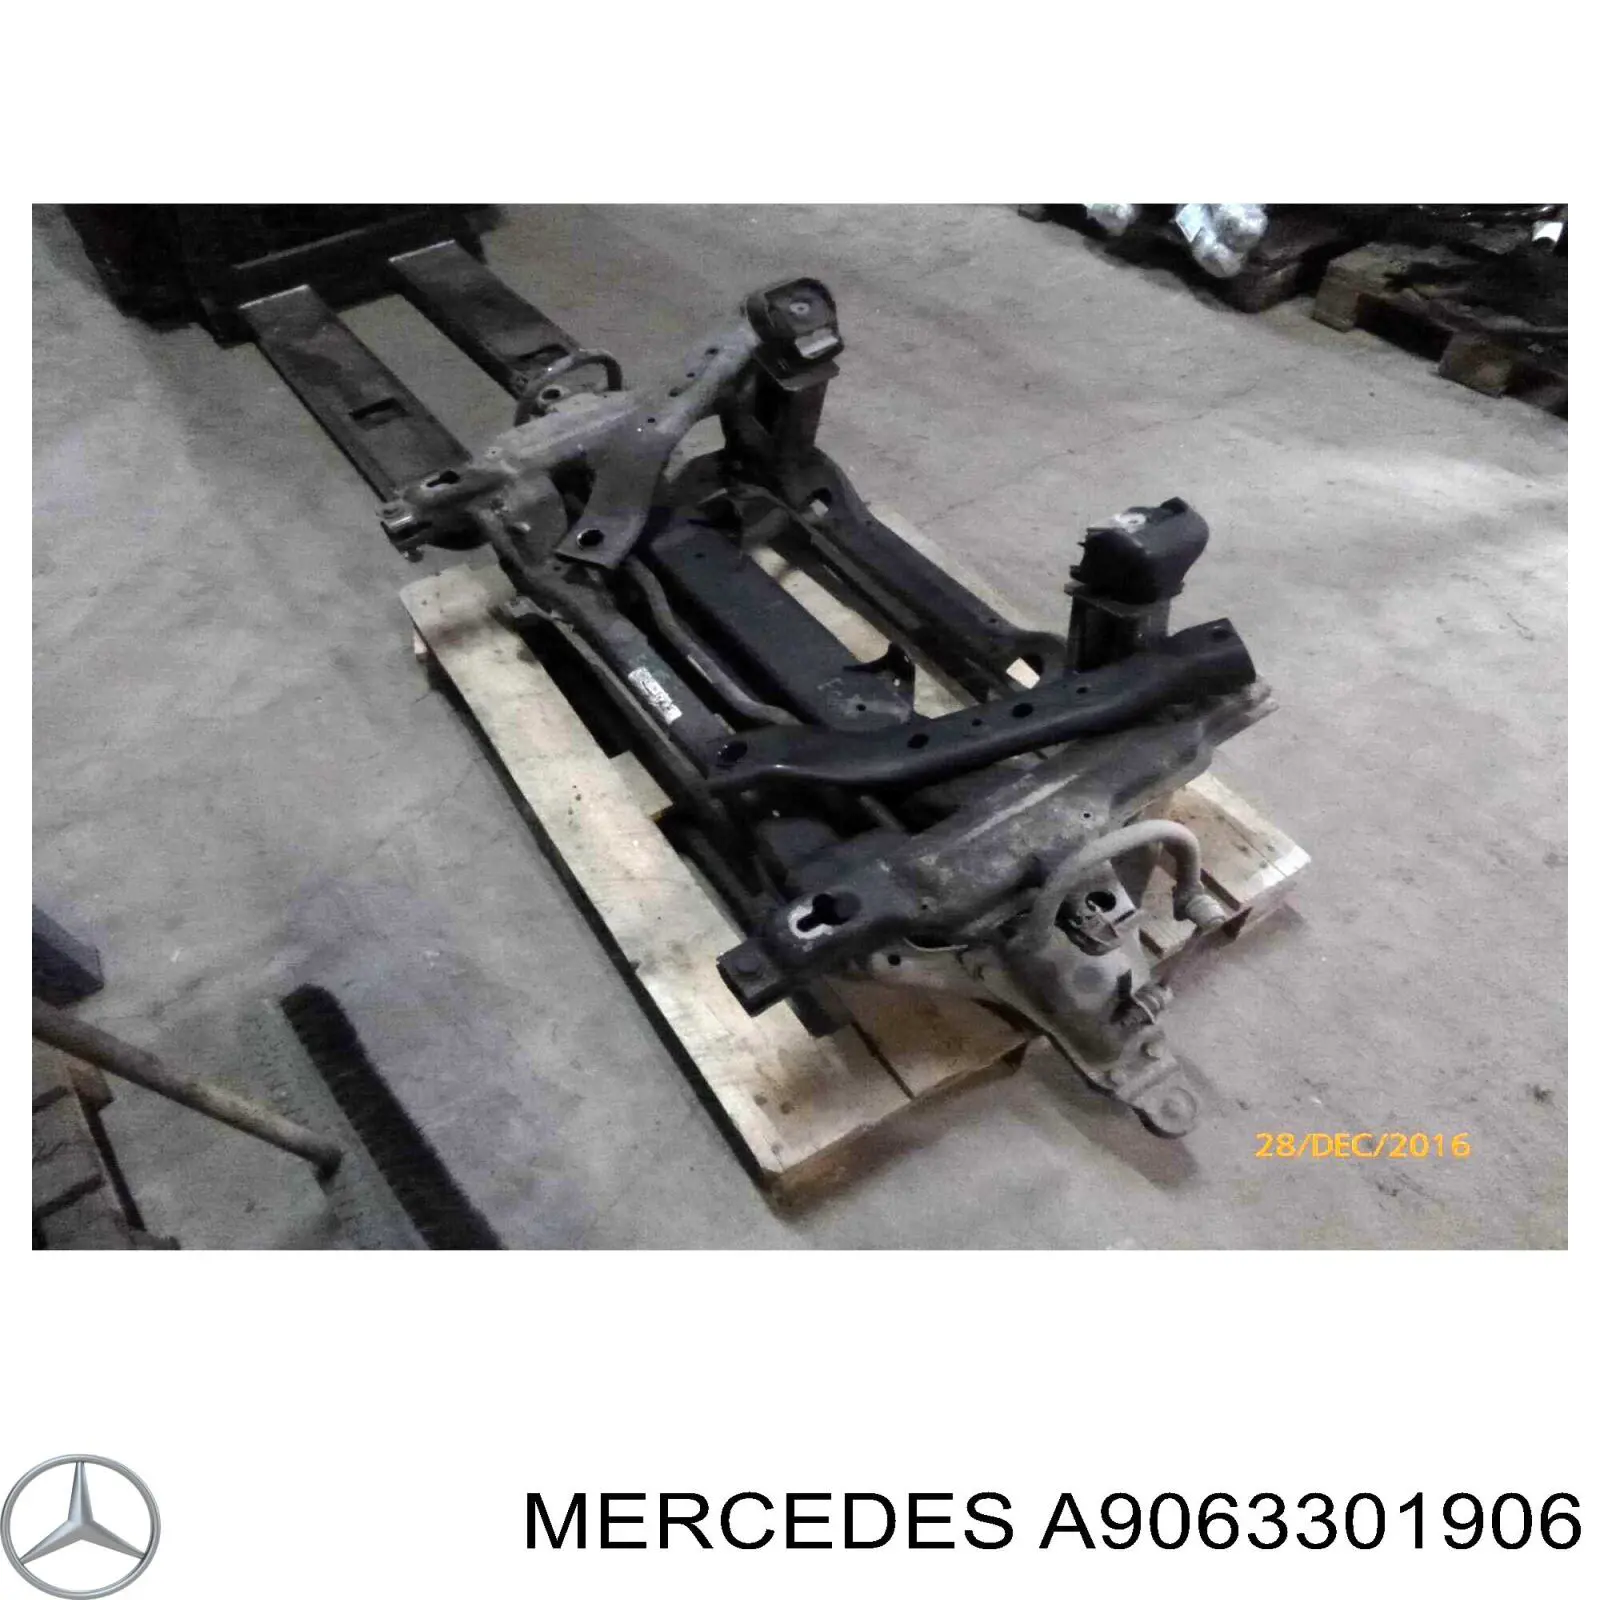 A9063301906 Mercedes балка передней подвески (подрамник)